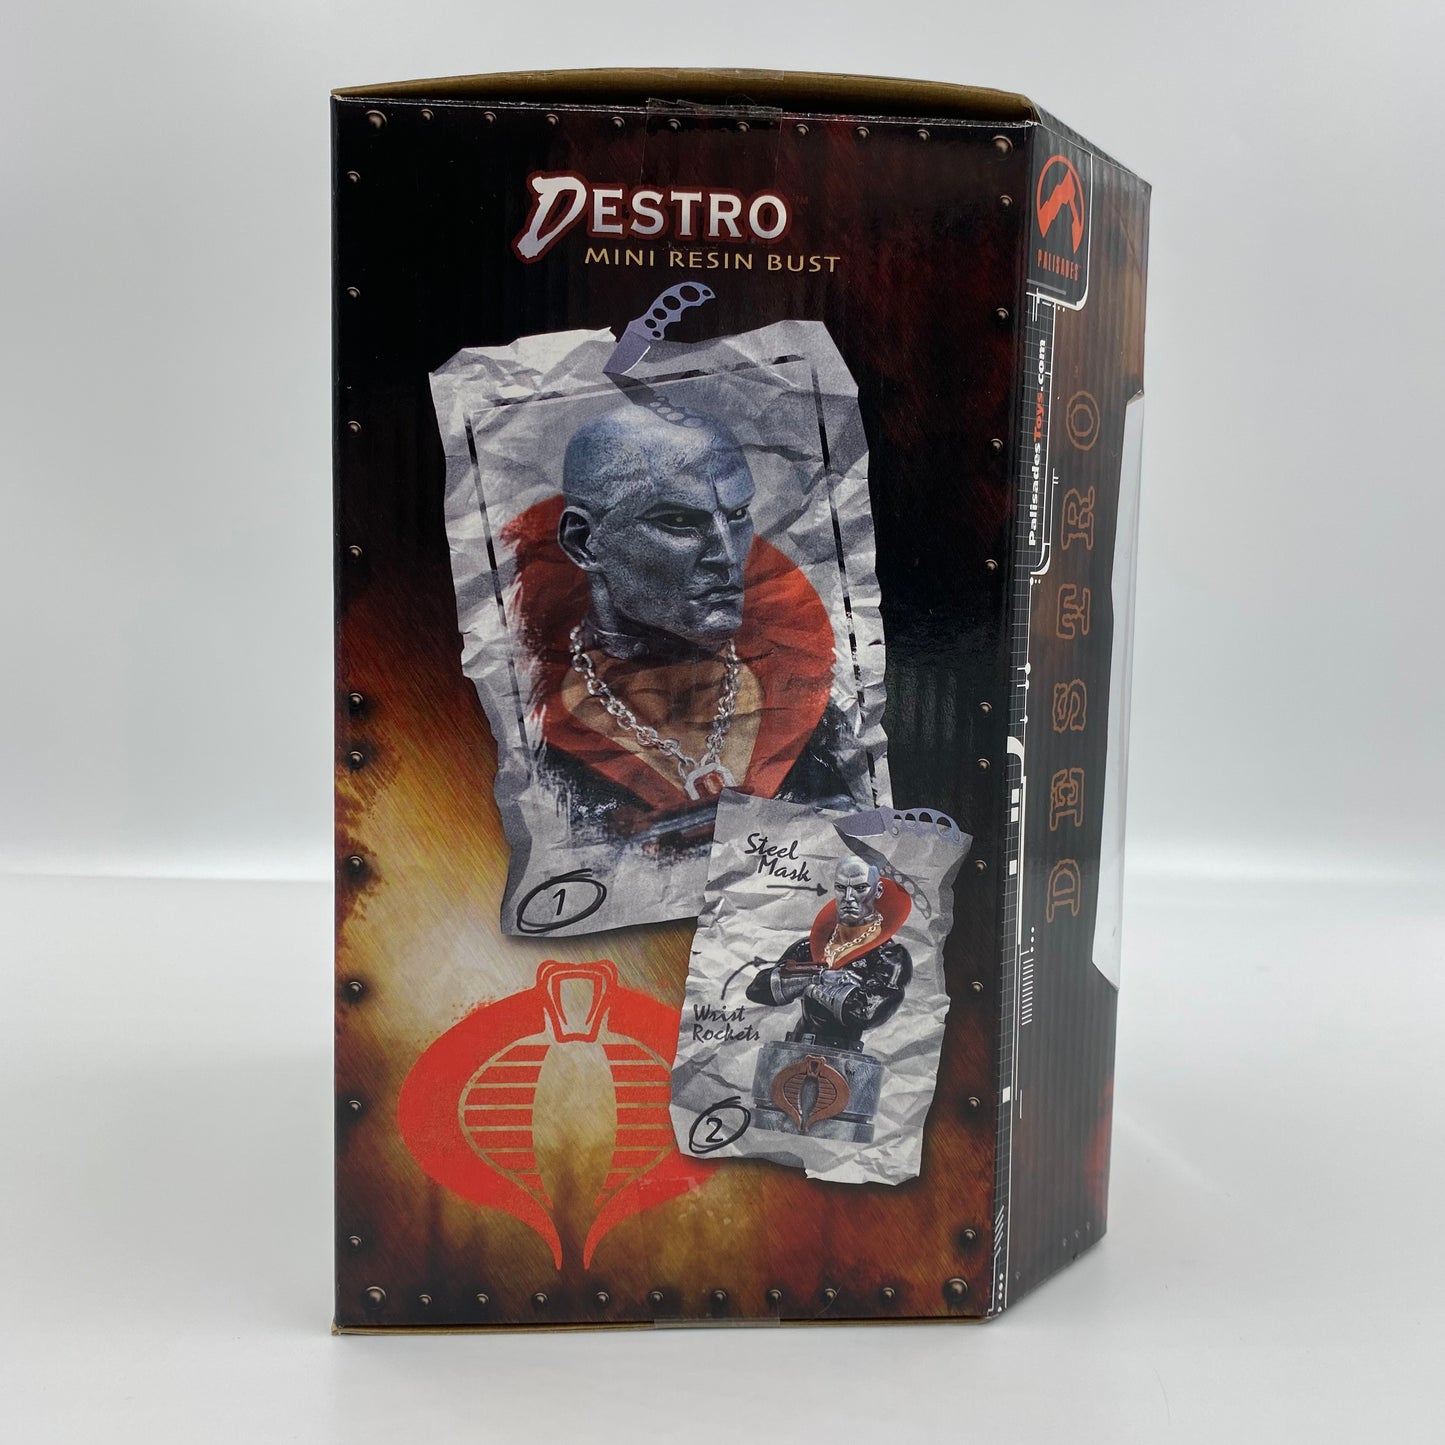 Destro mini resin bust (2003) Palisades